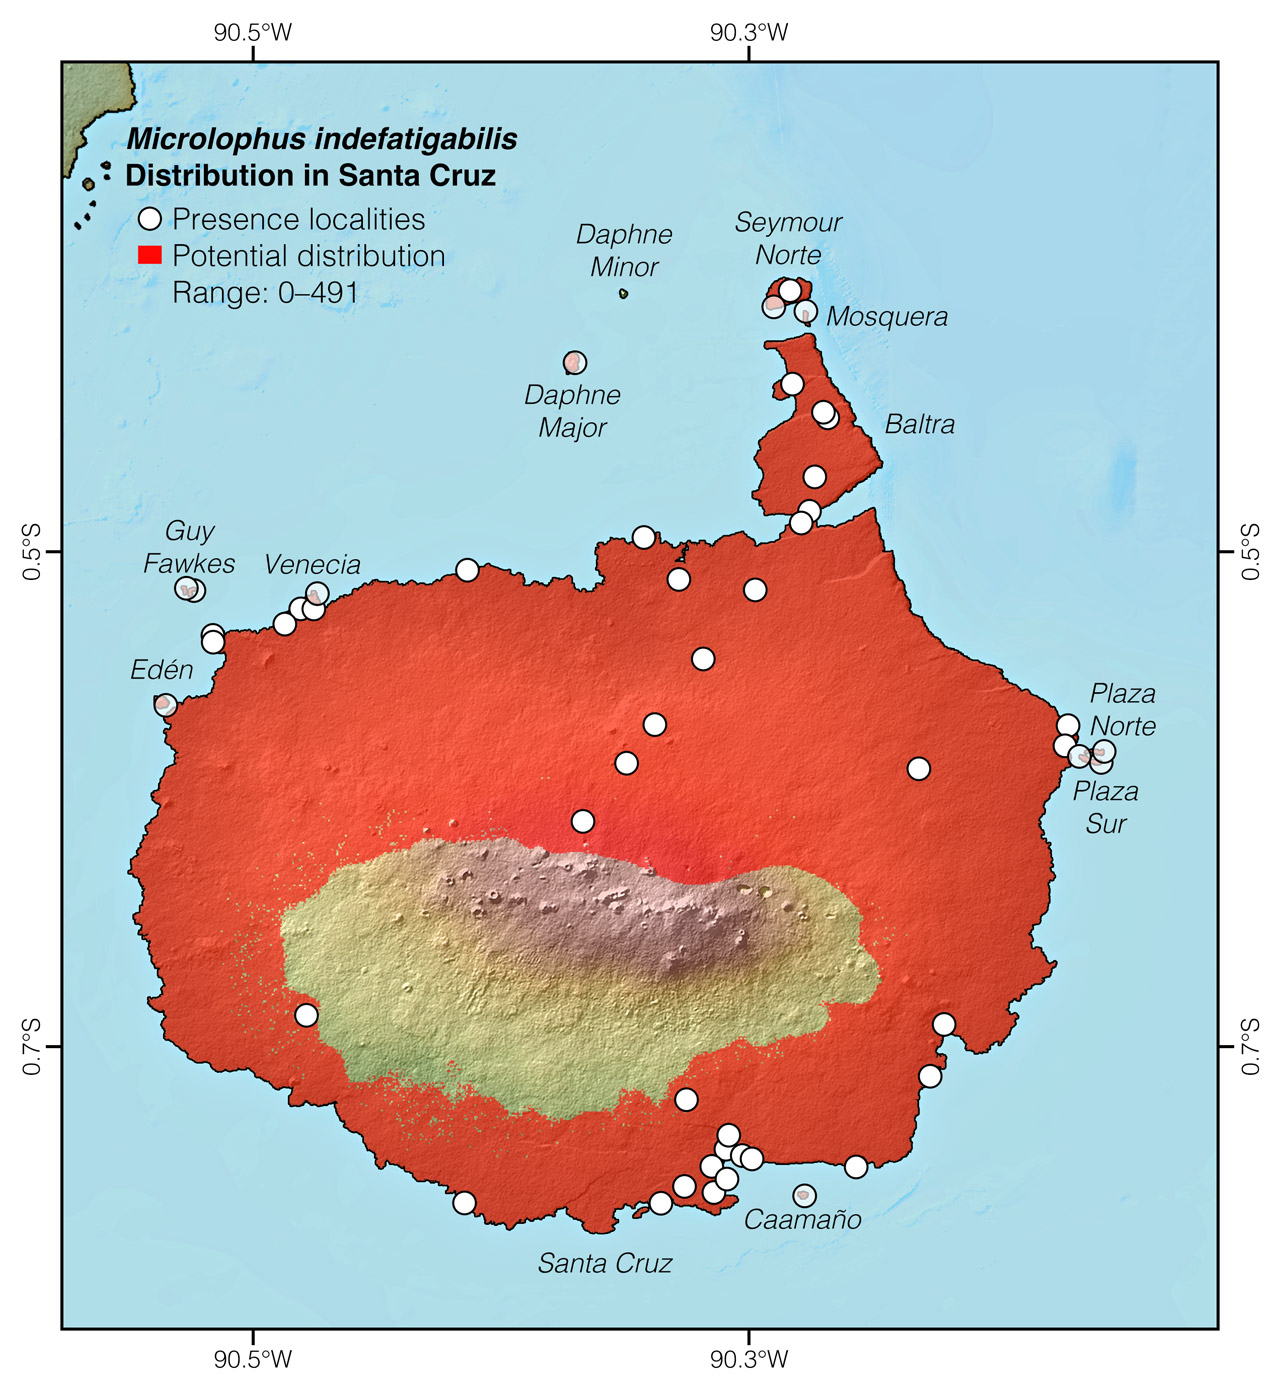 Distribution of Microlophus indefatigabilis in and around Santa Cruz Island